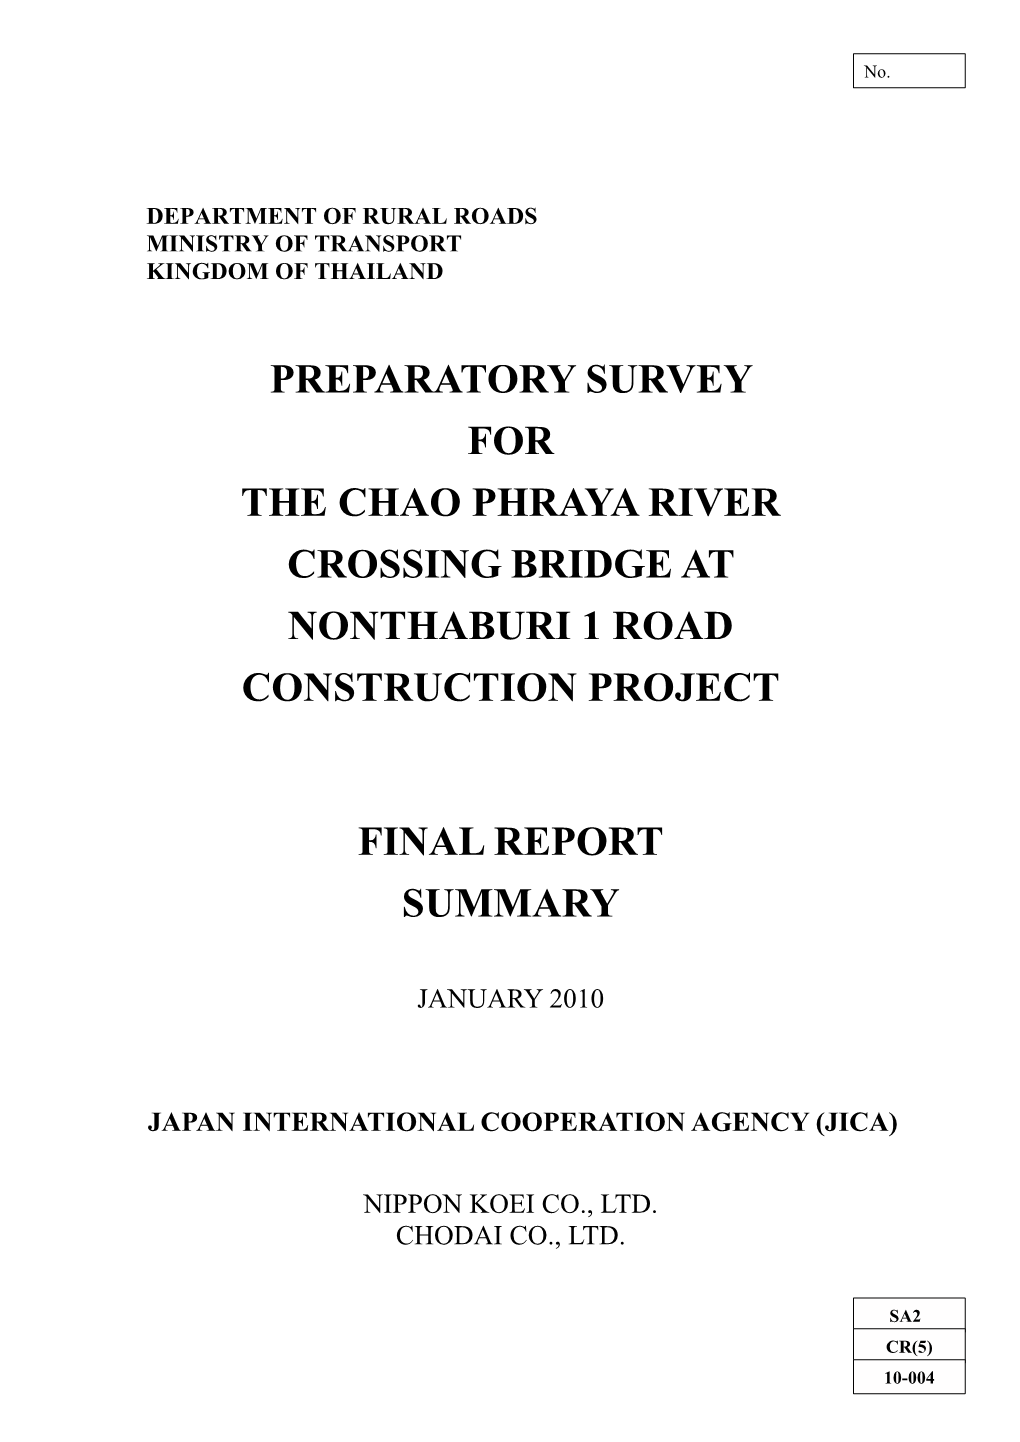 Preparatory Survey for the Chao Phraya River Crossing Bridge at Nonthaburi 1 Road Construction Project